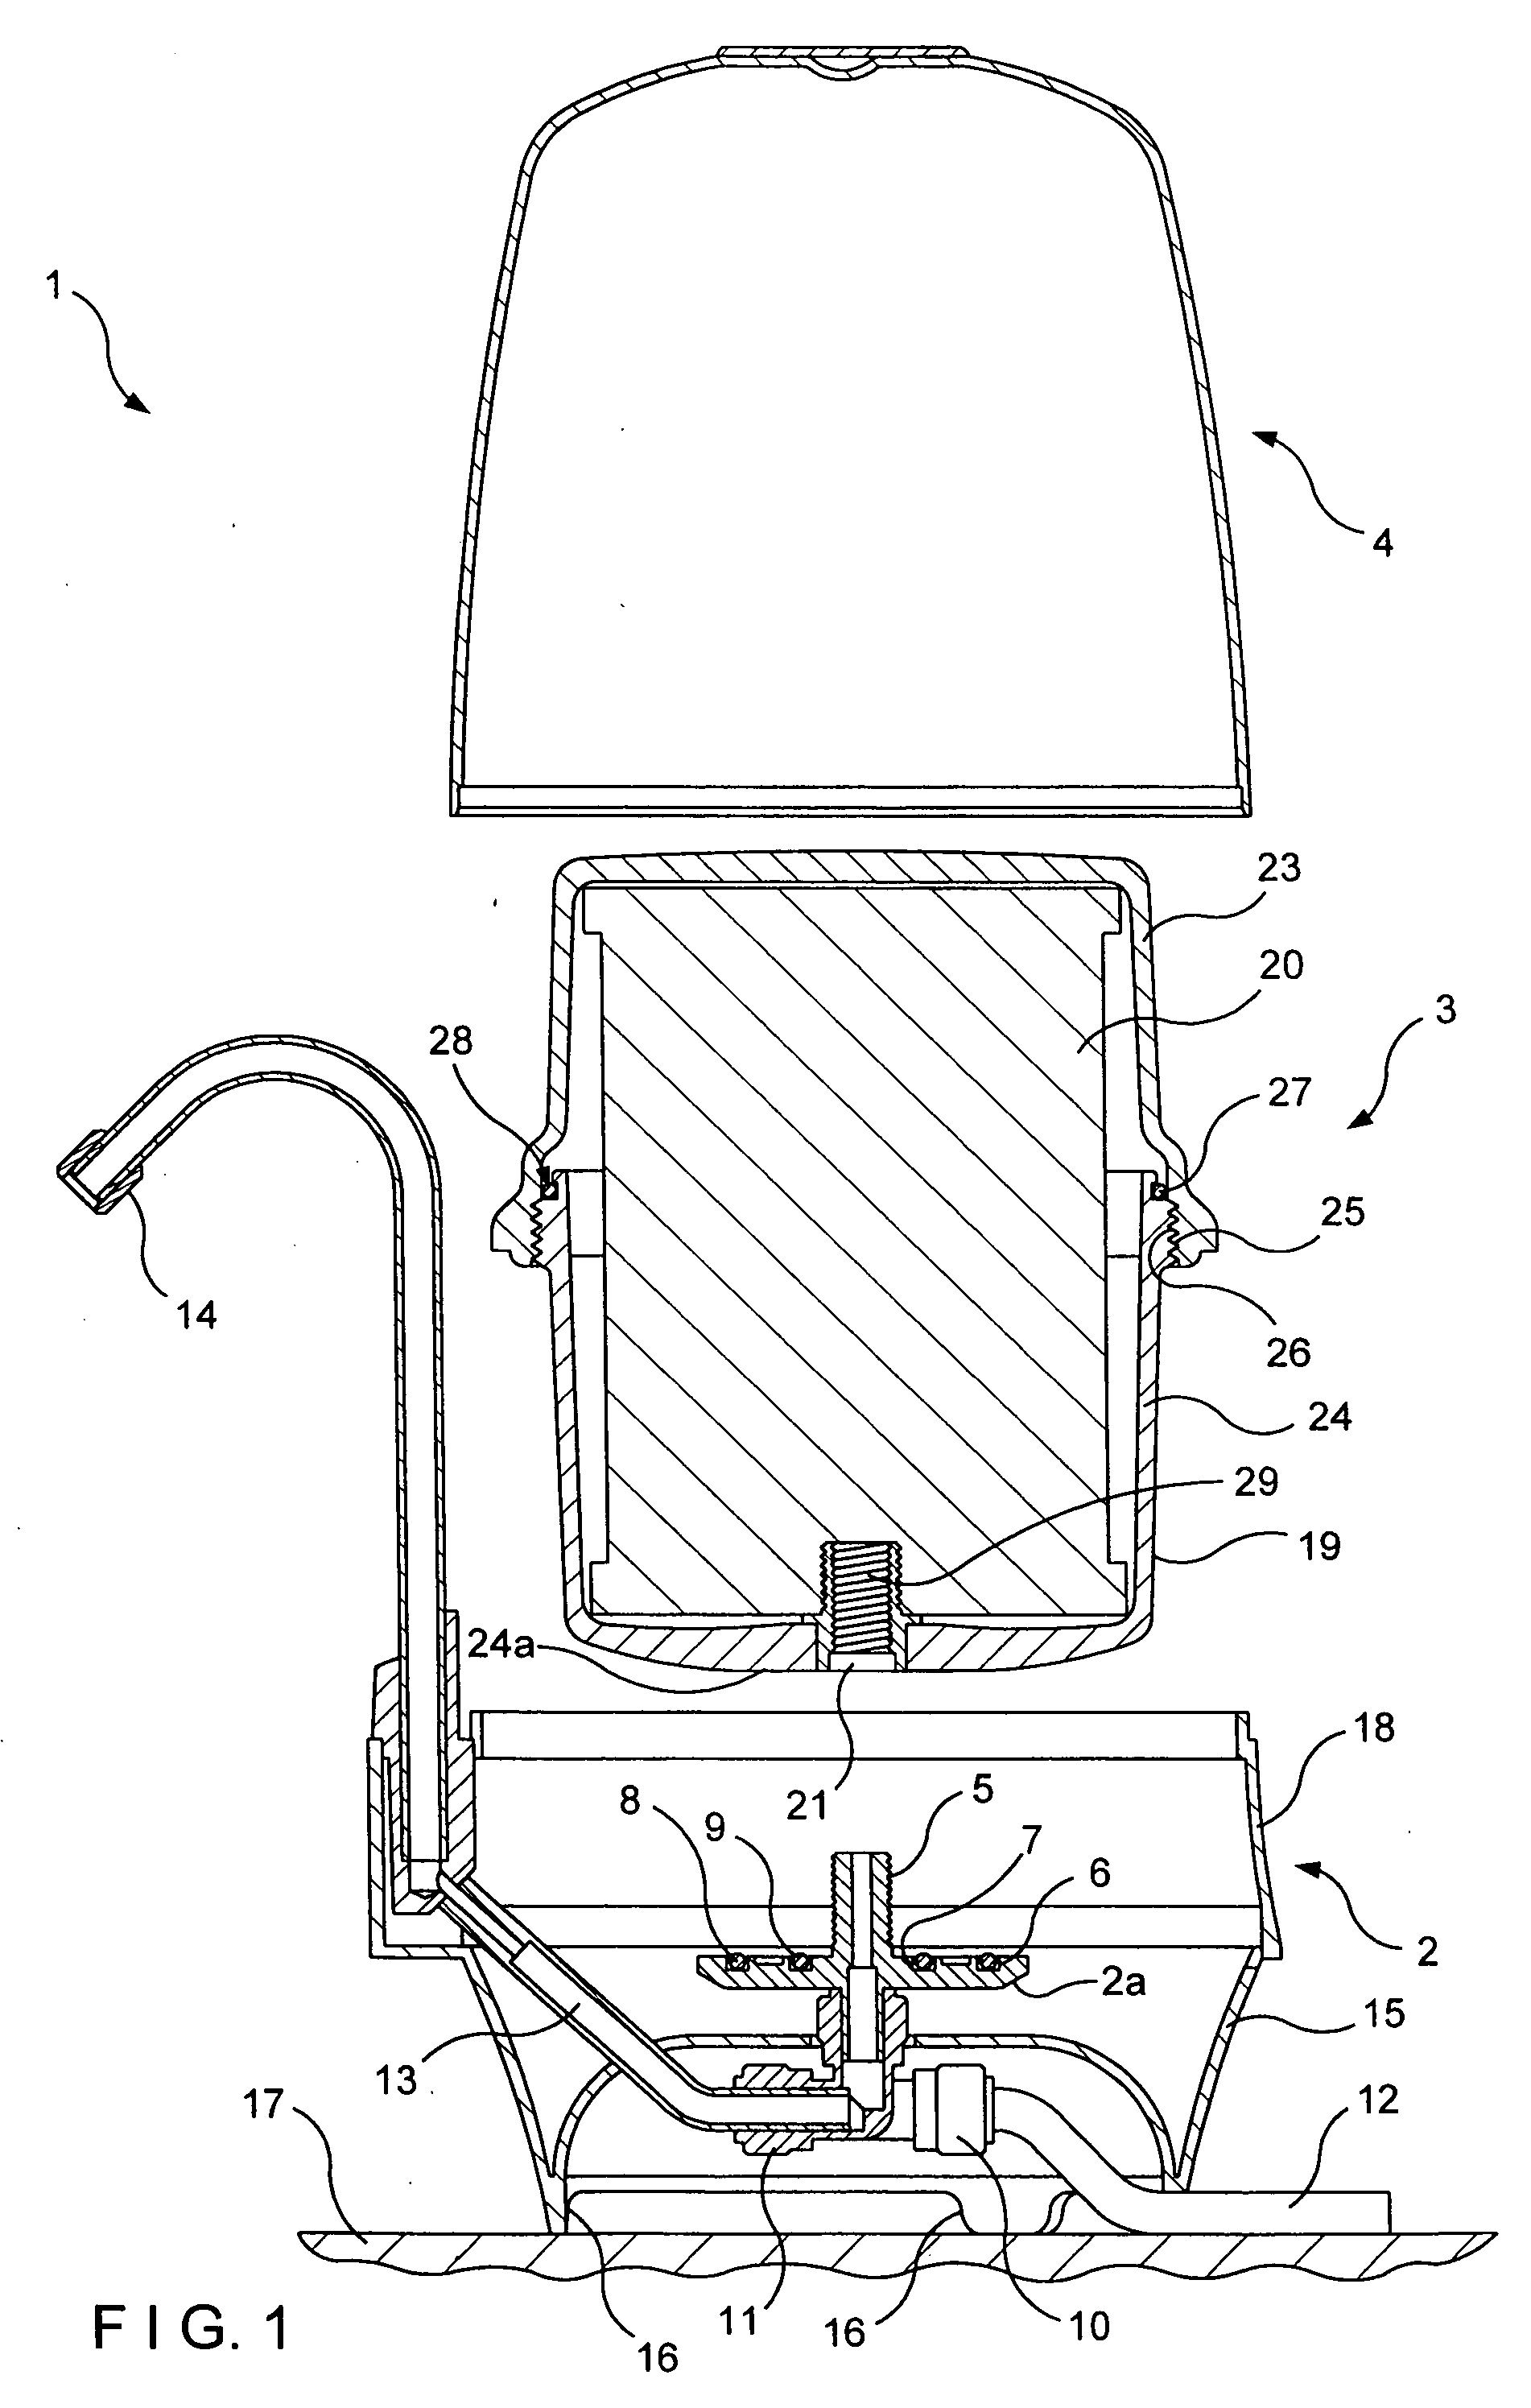 Water filtering apparatus